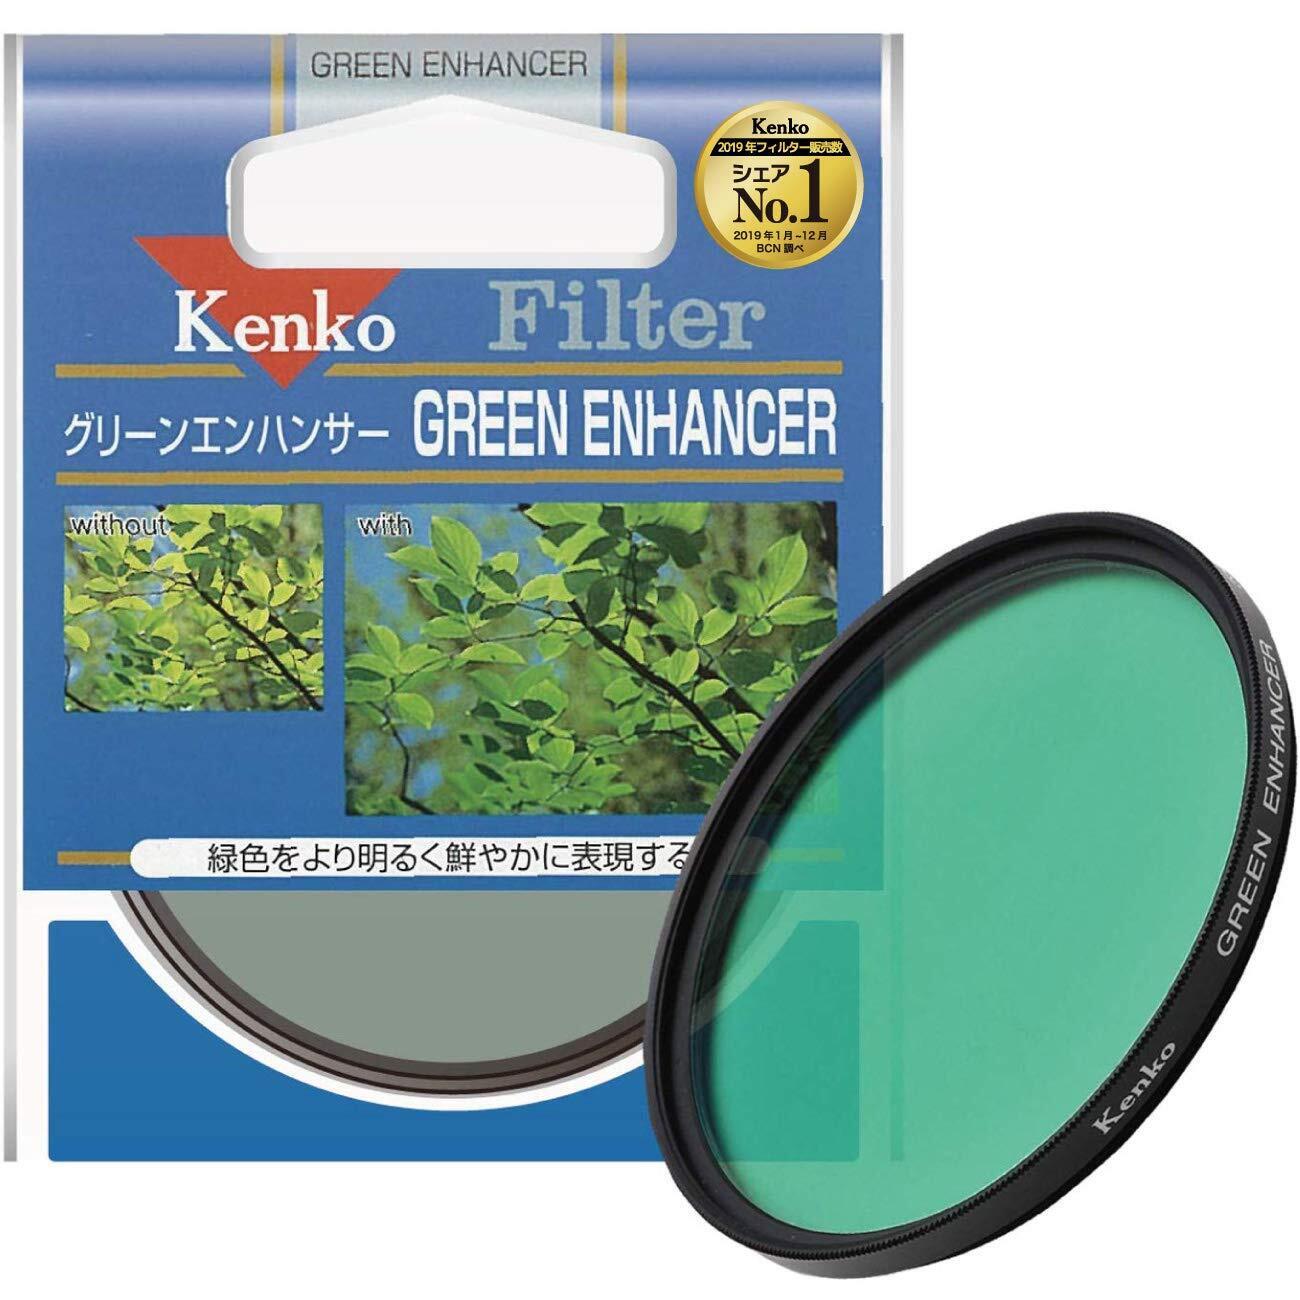 Kenko Lens Filter Green Enhancer 58Mm For Color Enhancement  No.5